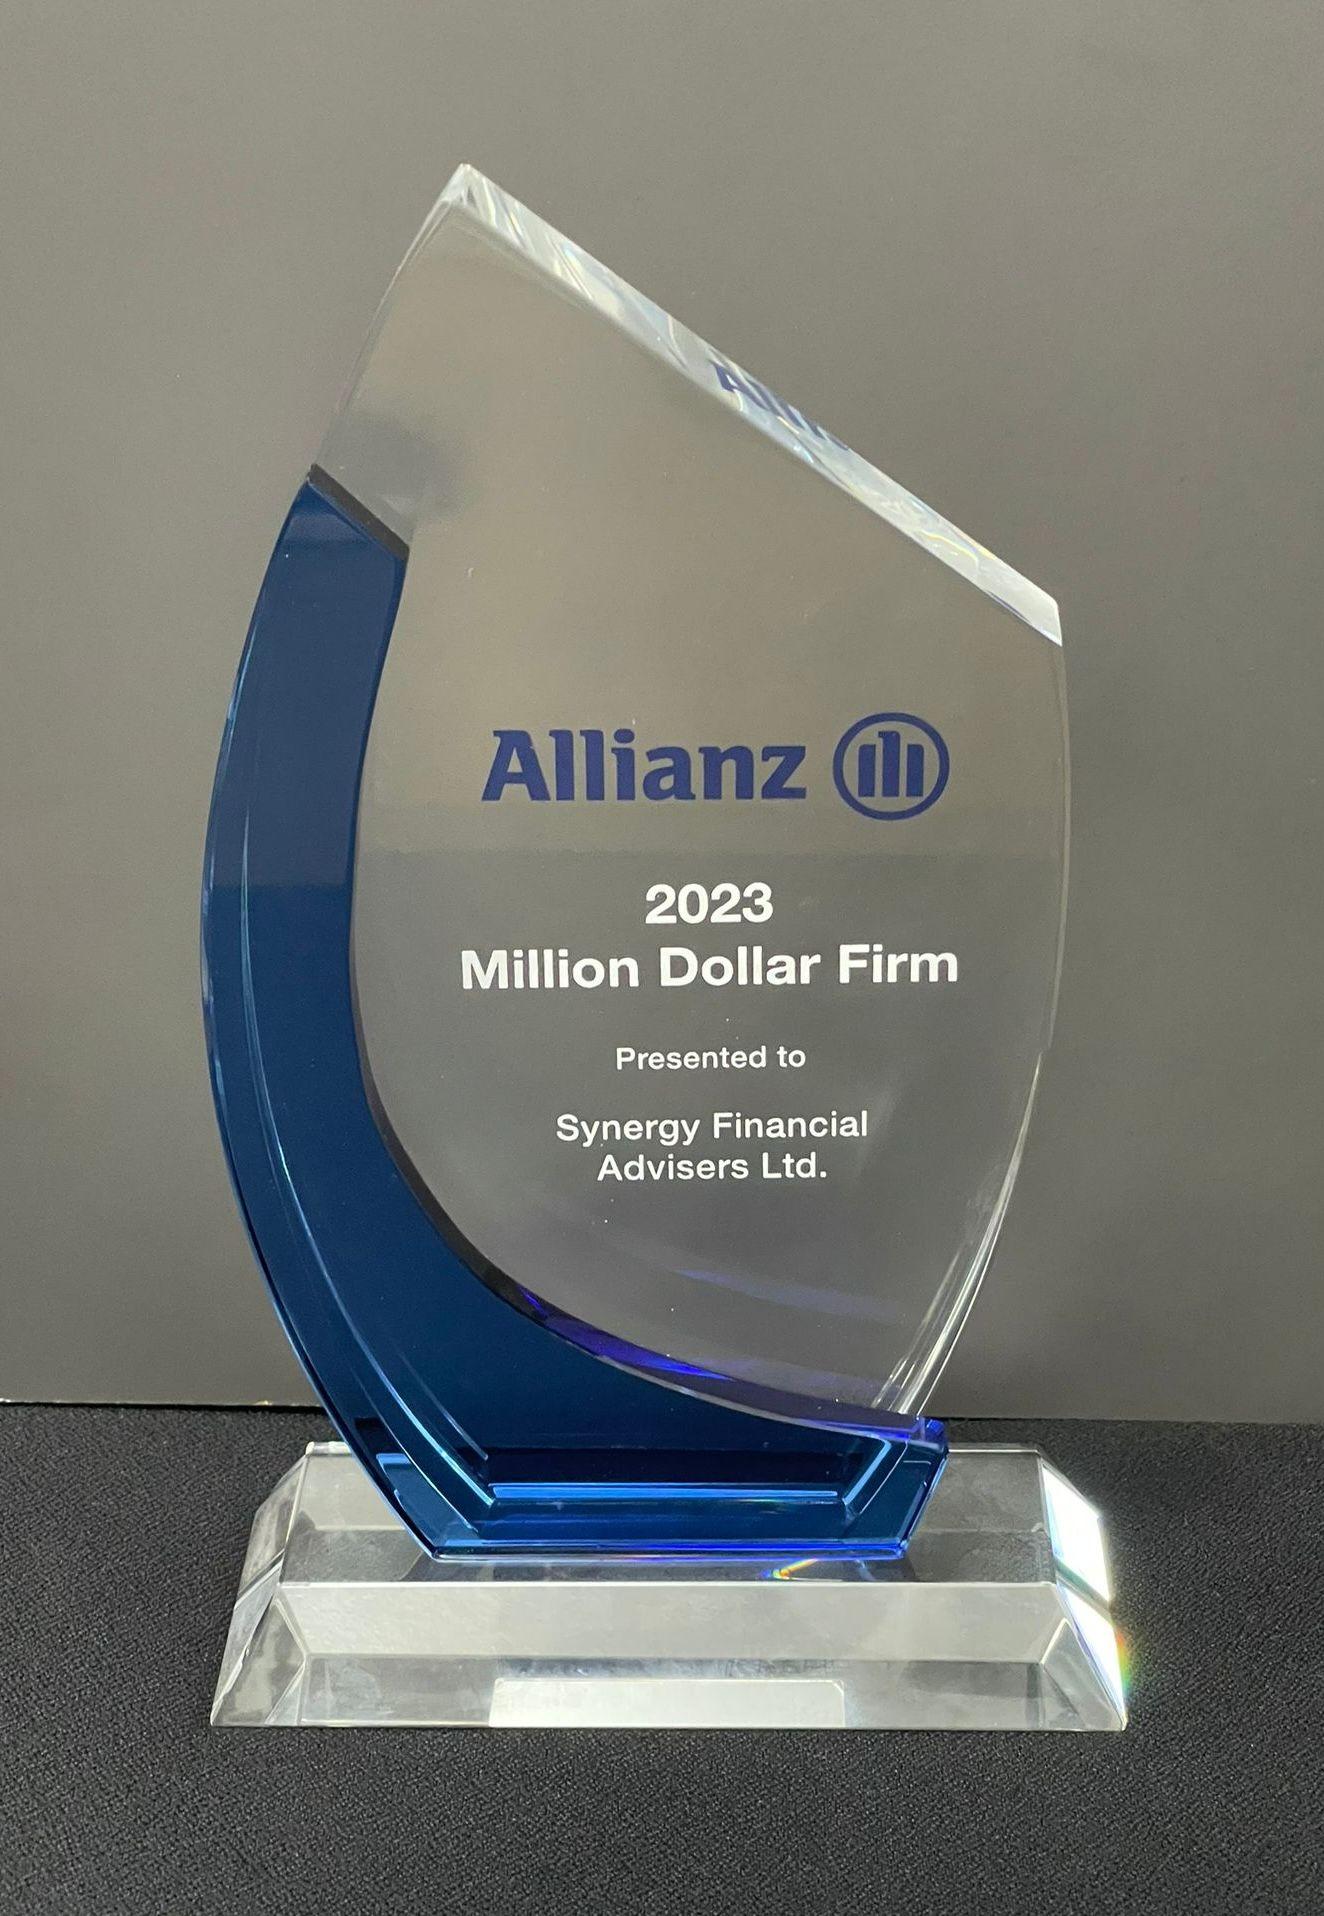 Allianz's Million Dollar Firm 2023